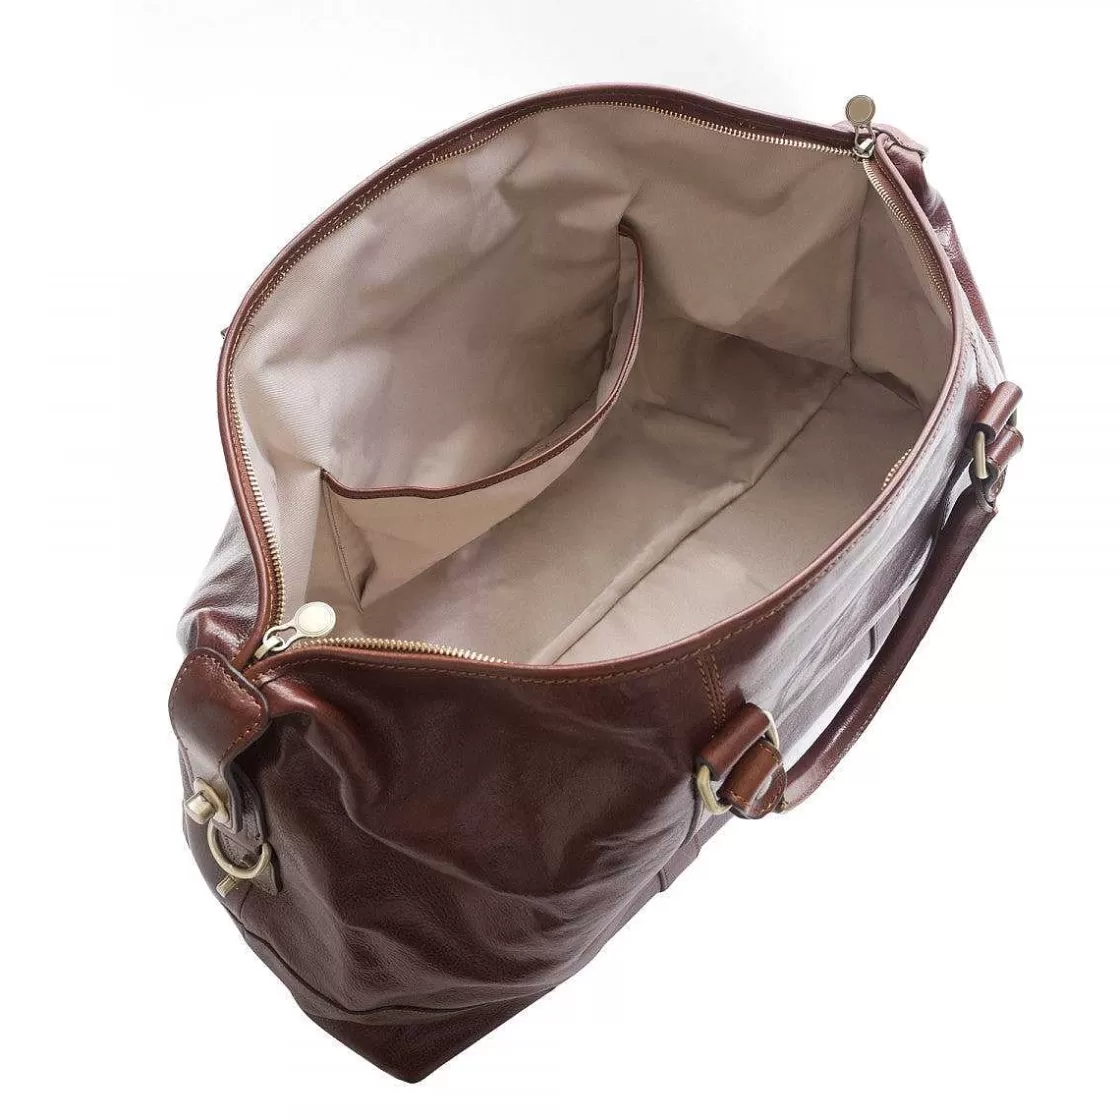 Leonardo Travel Bag In Full Grain Leather Double Zip Inside Pocket Adjustable Shoulder Strap Cheap